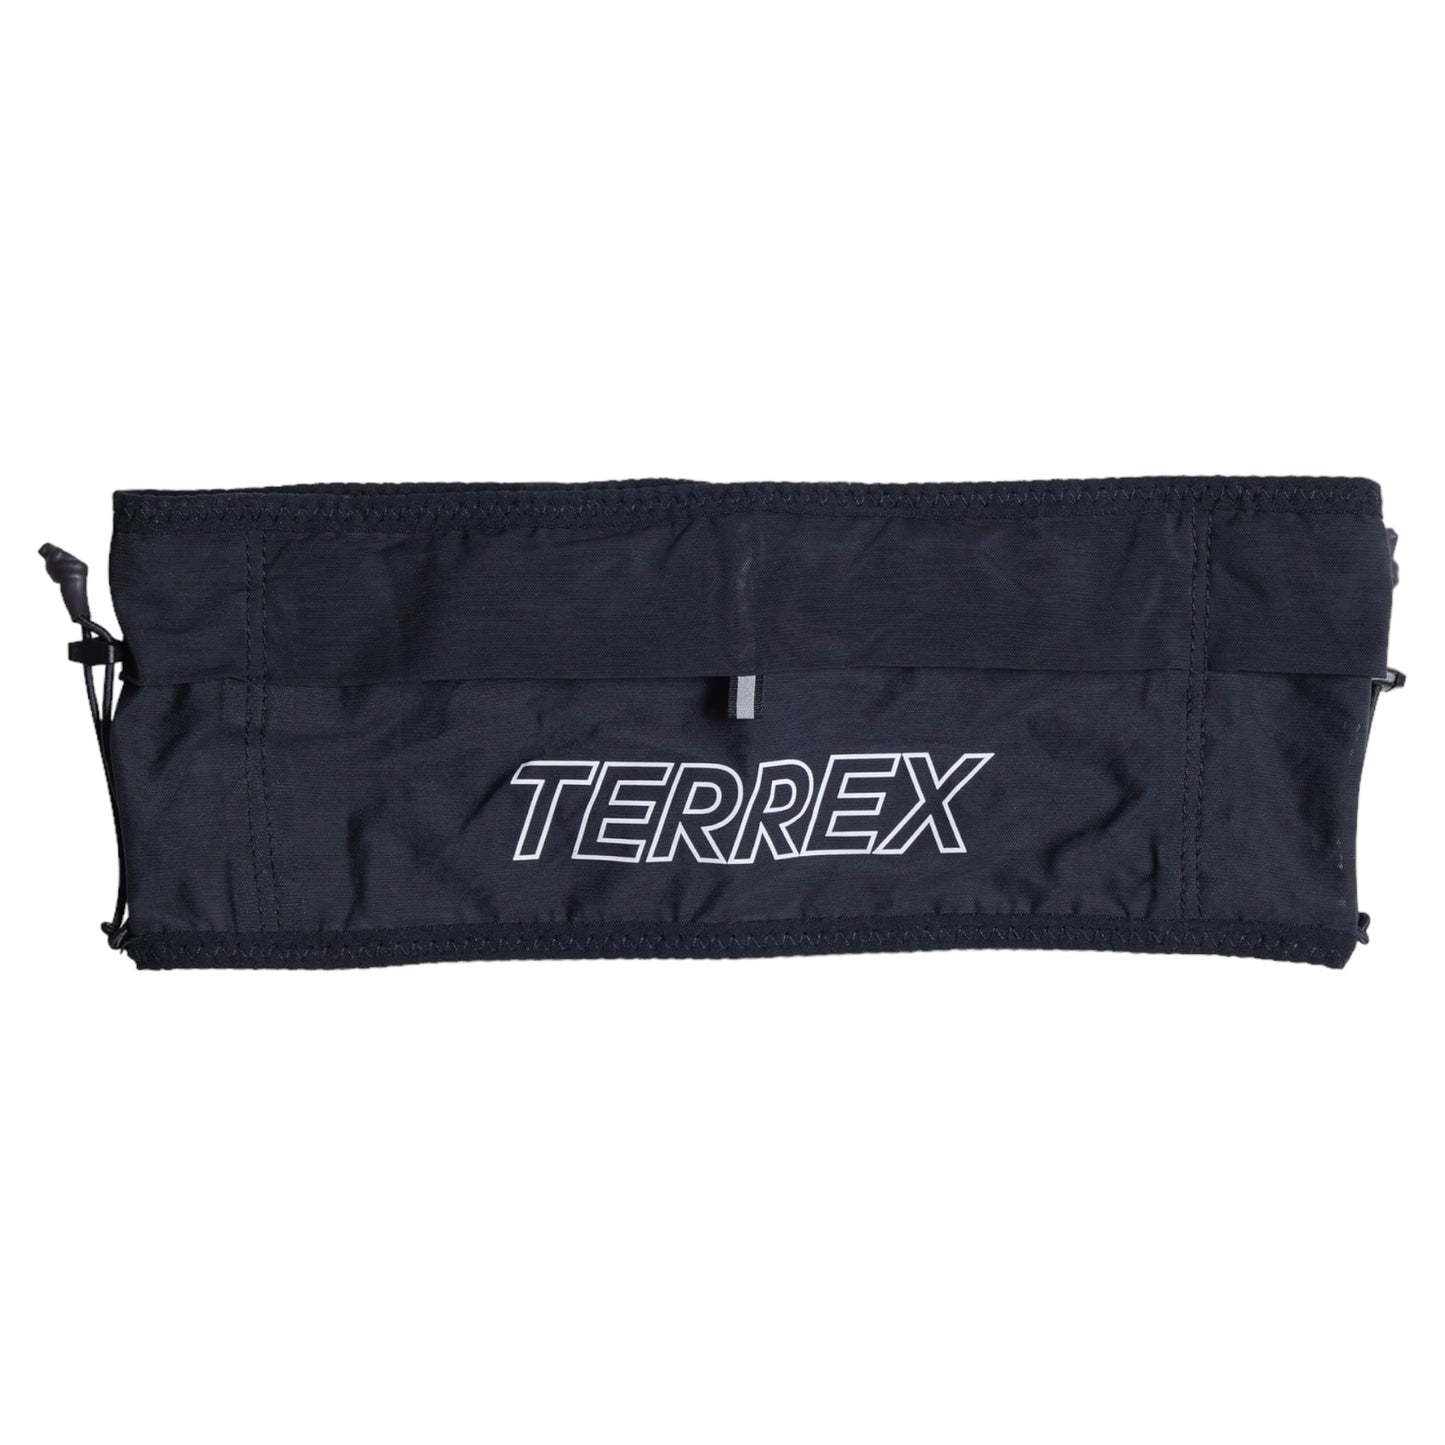 Adidas - Terrex Trail Belt - black / impora - Ceinture de running